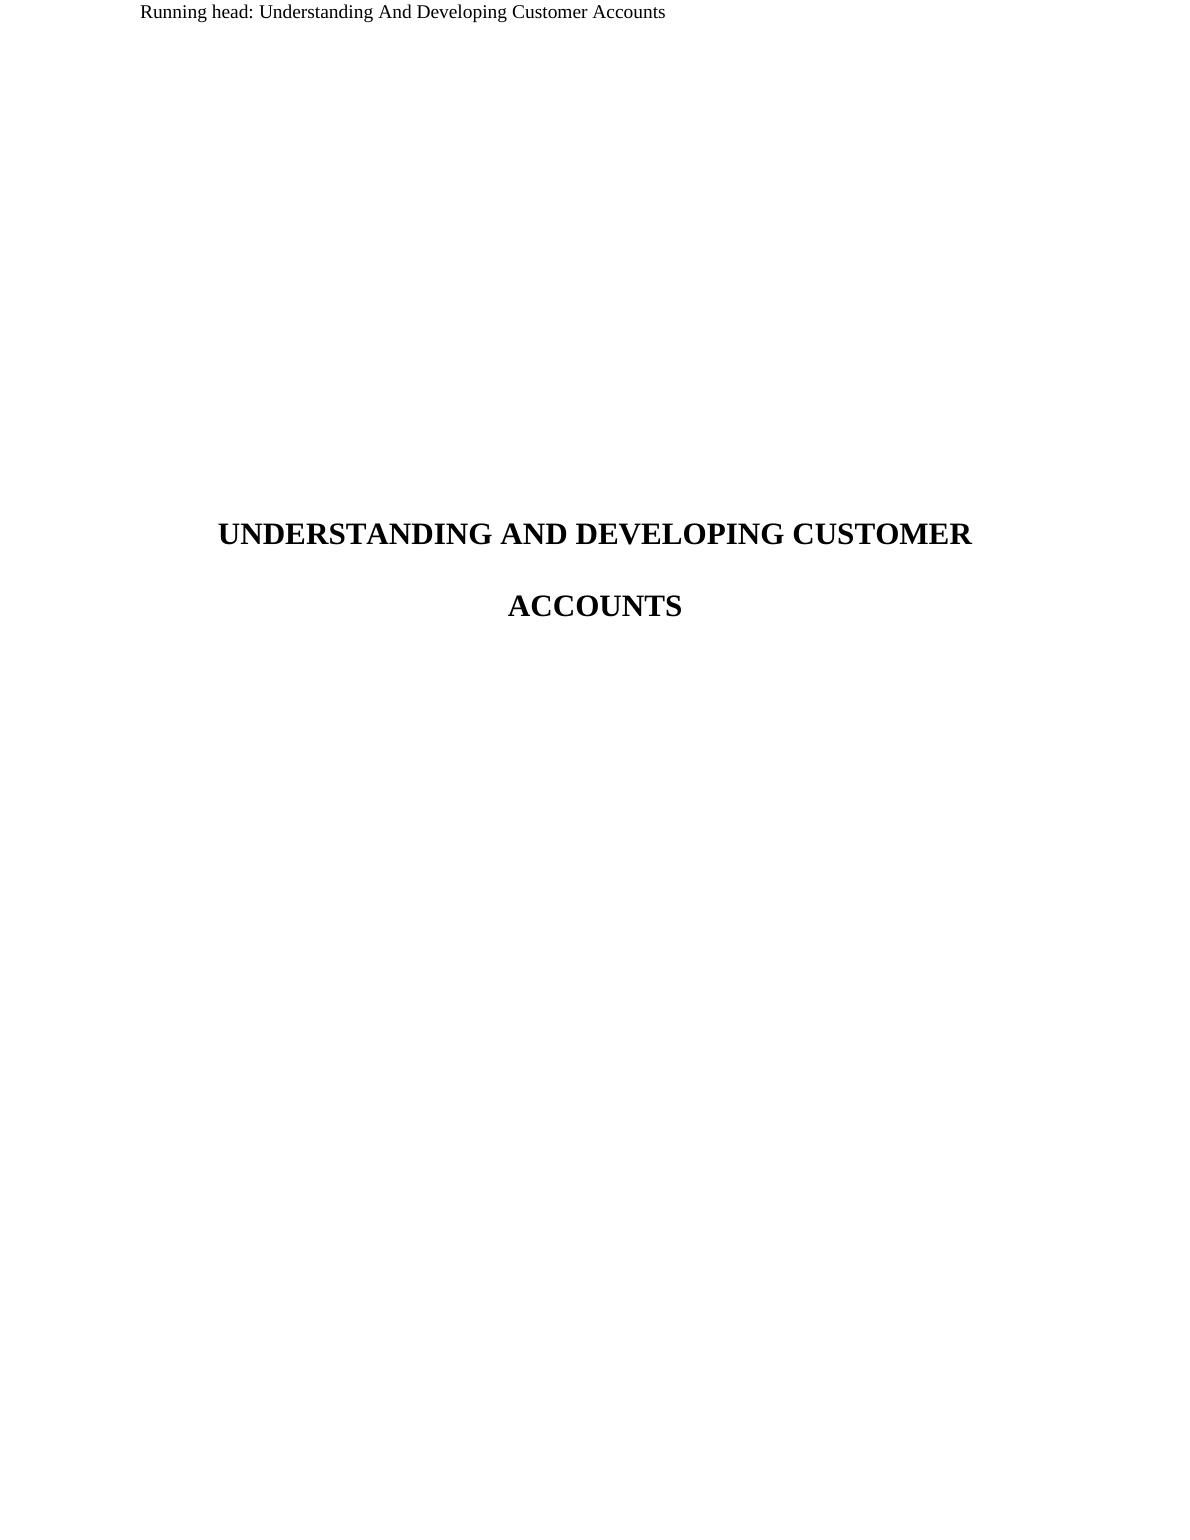 Understanding And Developing Customer Accounts_1